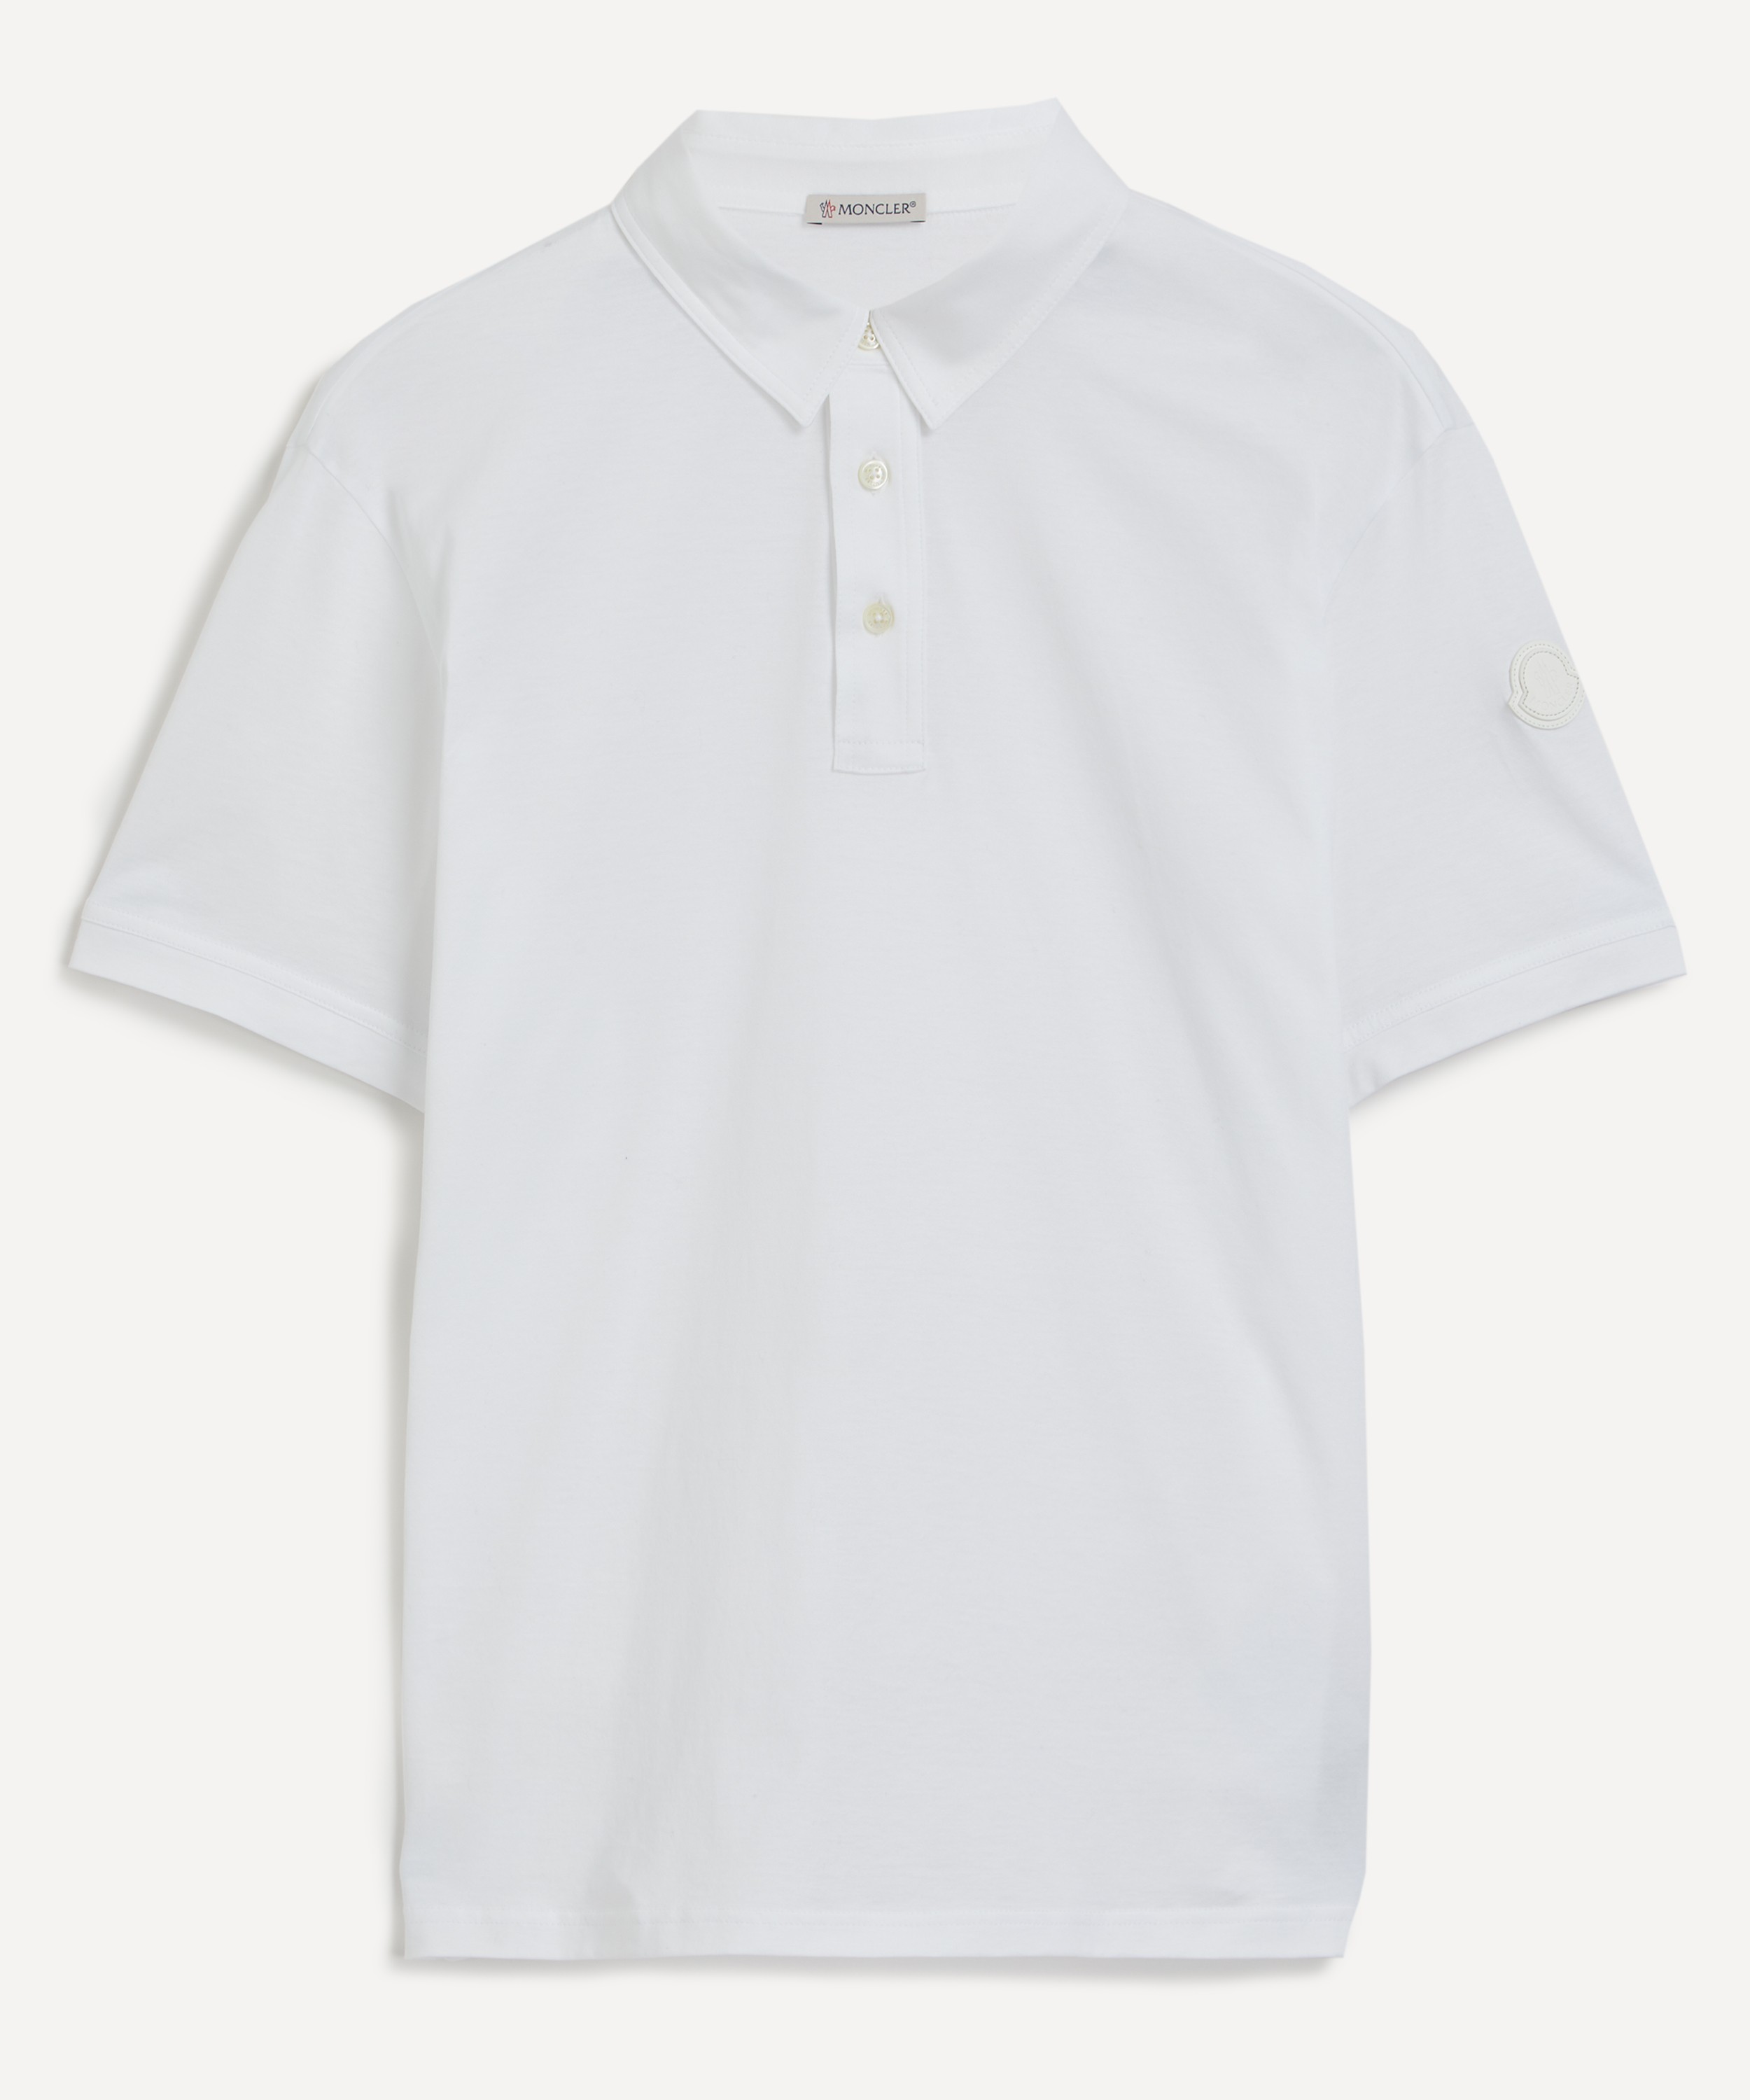 Moncler - Optical White Polo Shirt image number 0